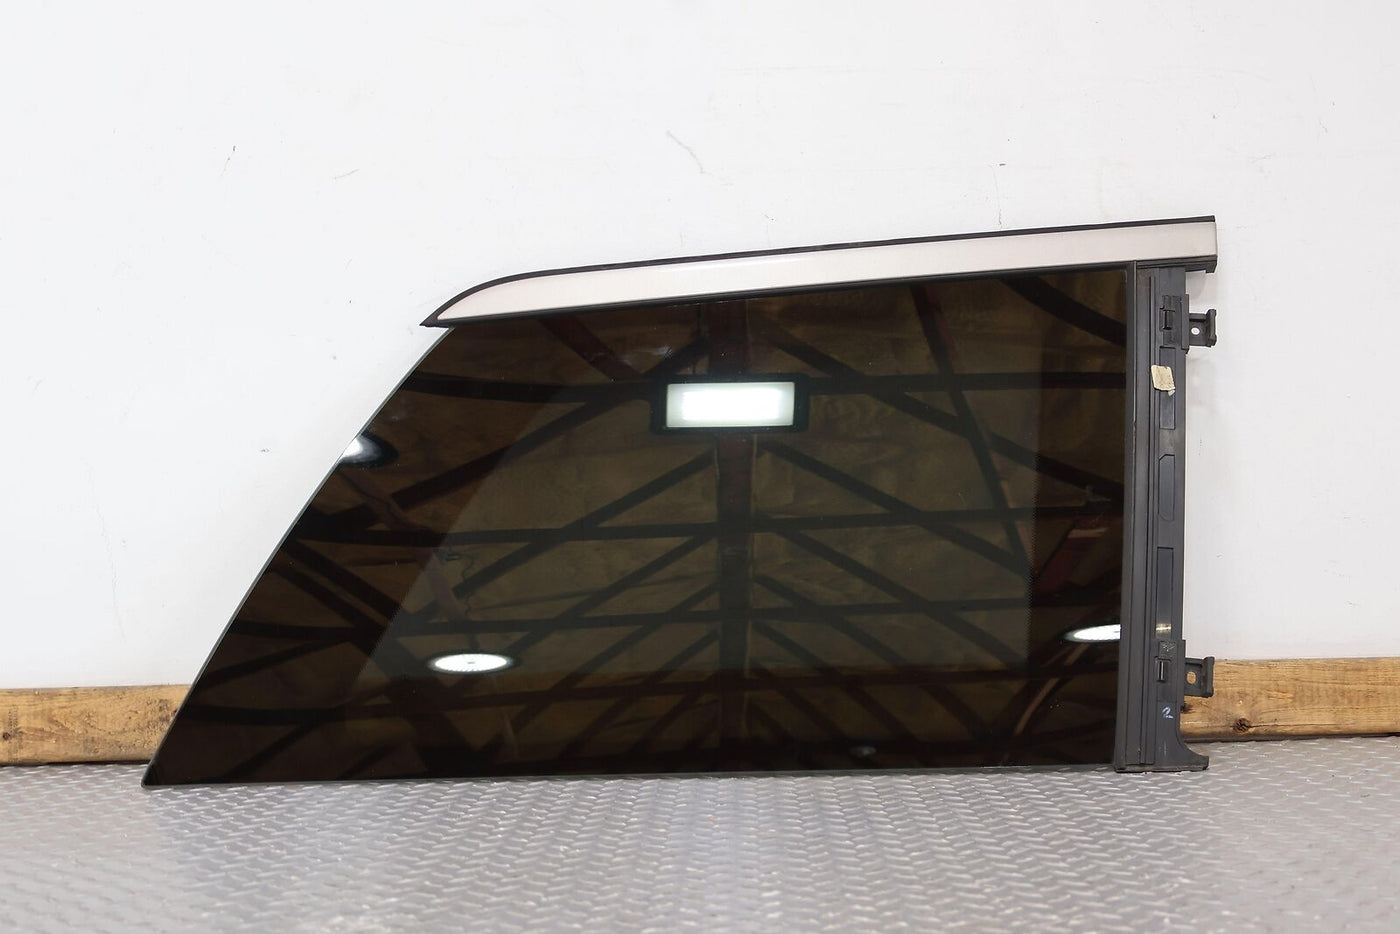 07-12 Mercedes GL450 Rear Right Quarter Glass Window (Privacy Tint) Silver Trim